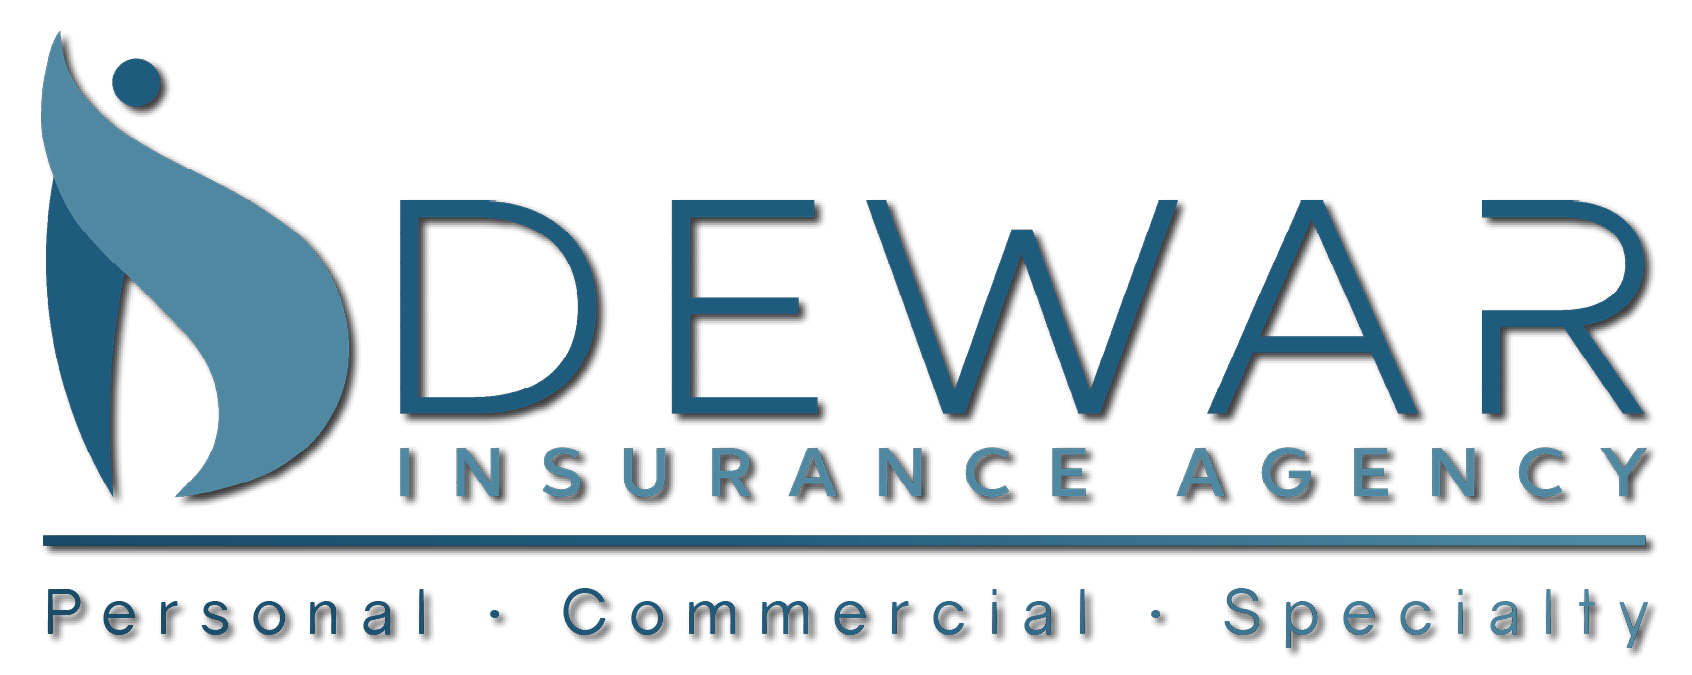 Dewar insurance Agency